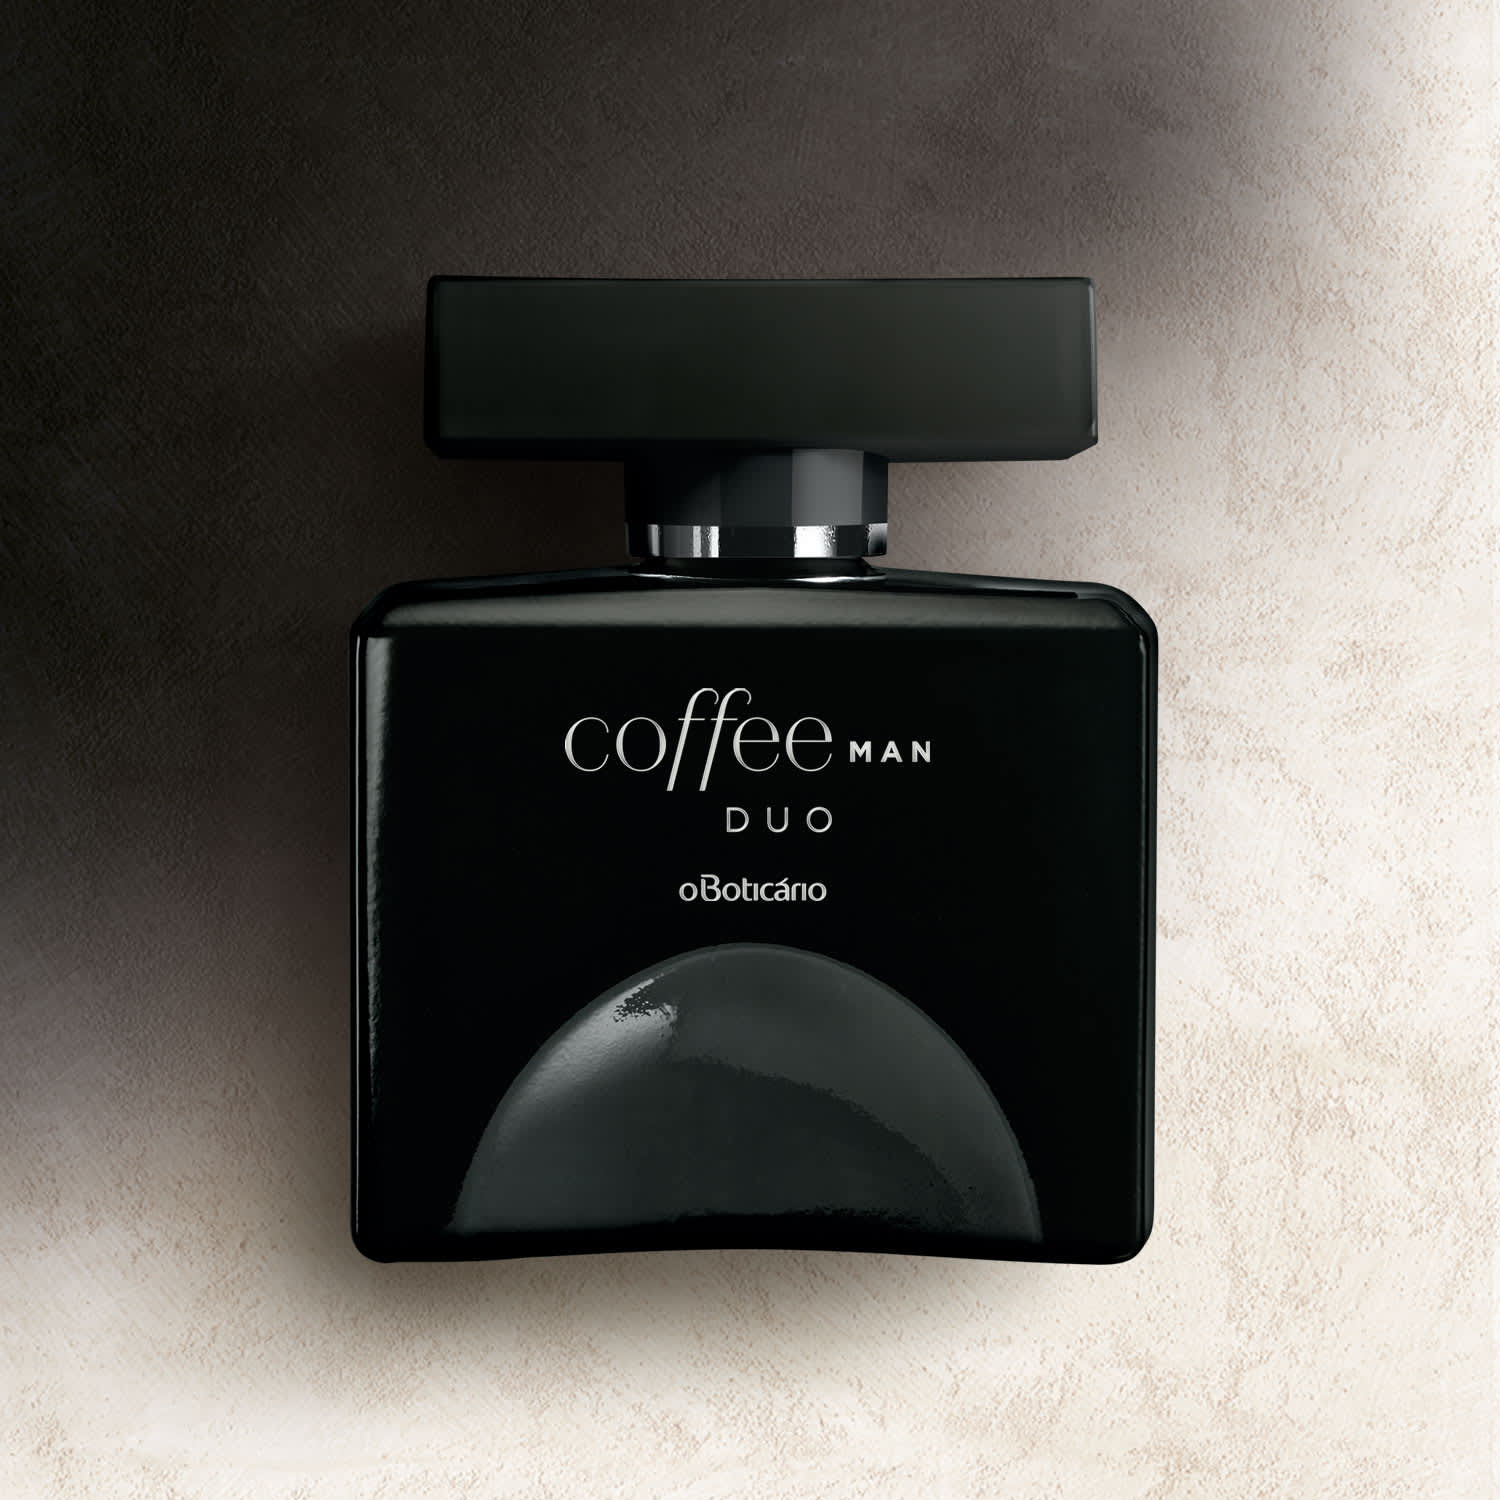 Coffee Man Duo, um perfume masculino que agrada rodas as idades, é